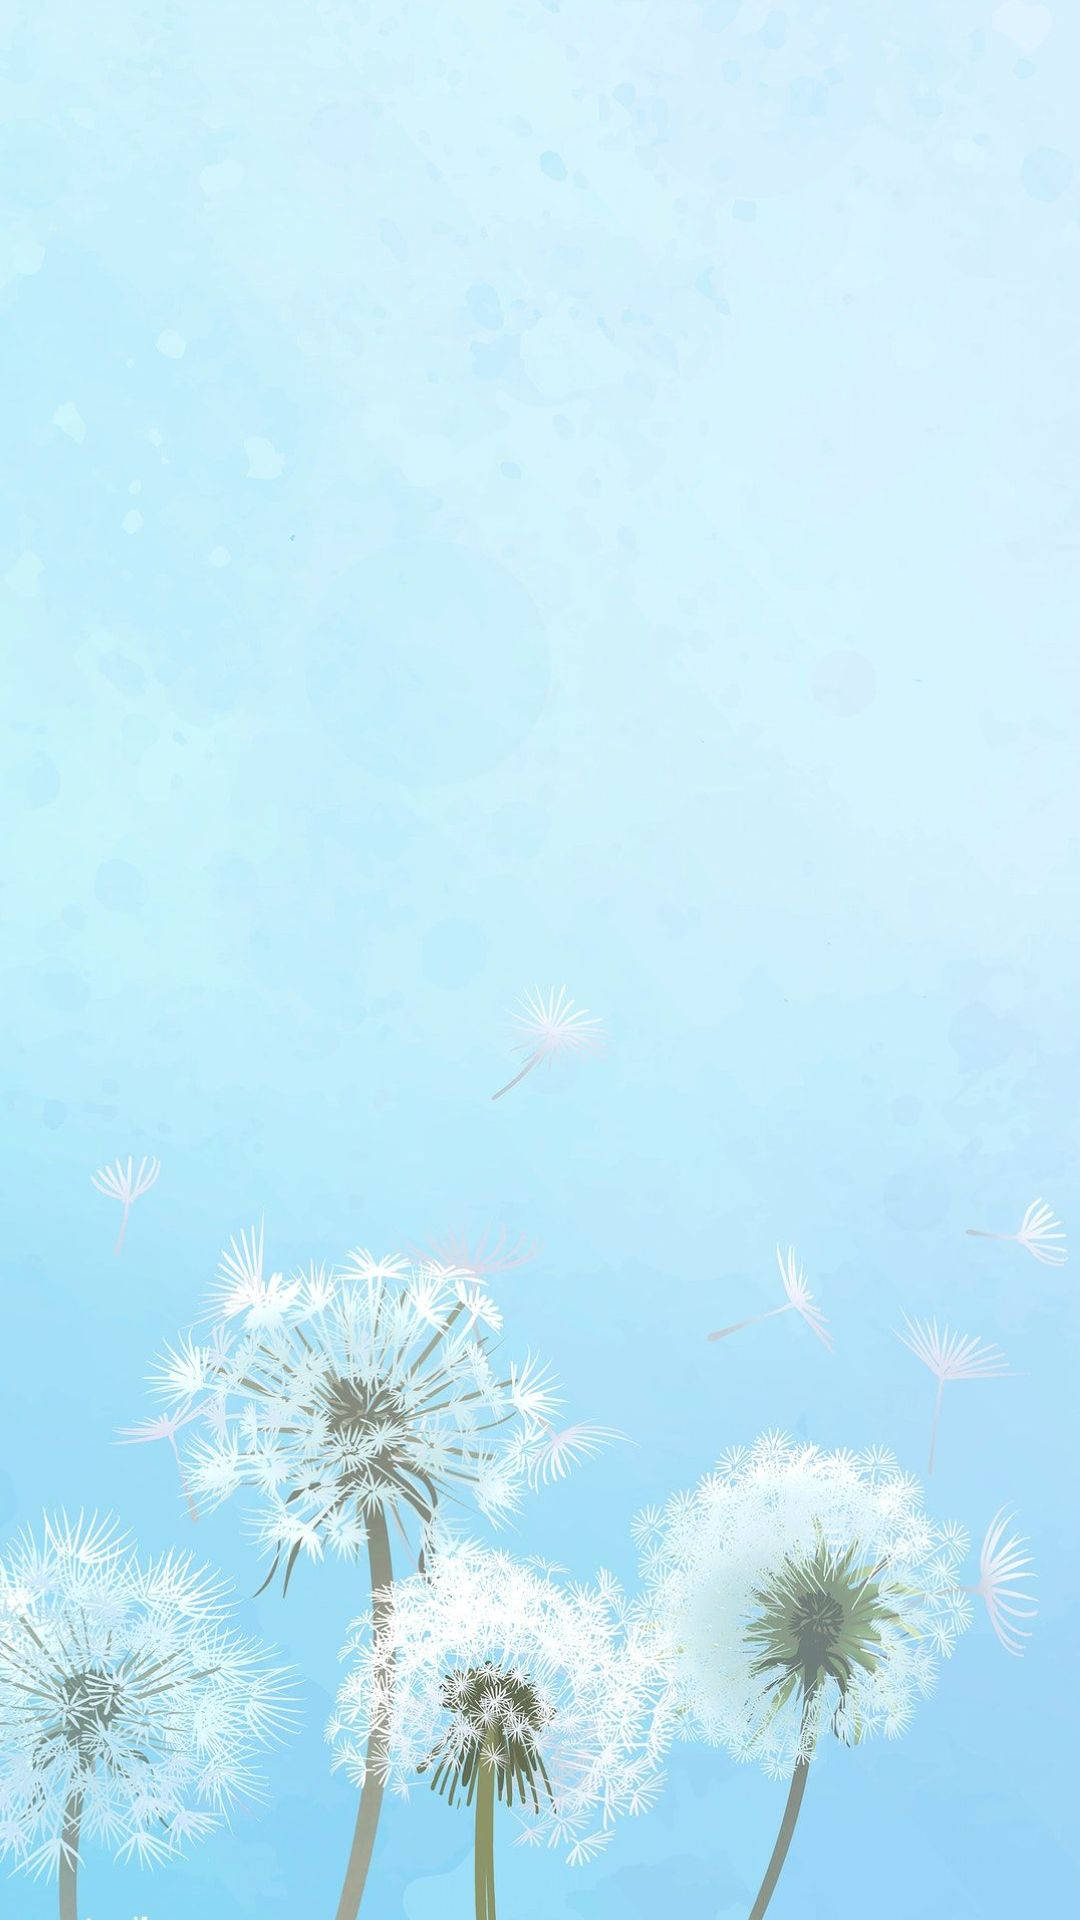 Common Dandelions On Baby Blue Sky Wallpaper